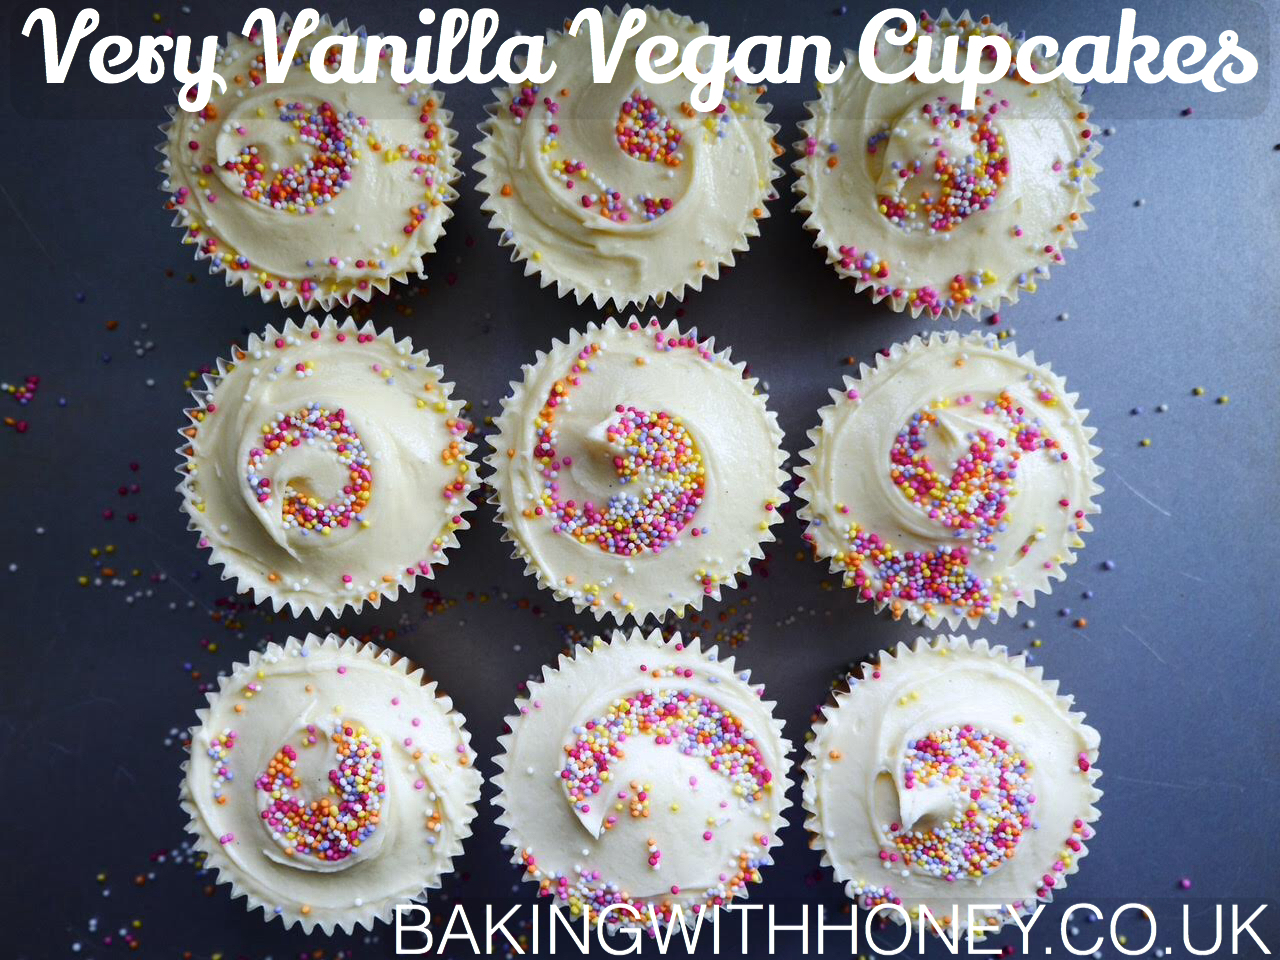 Vegan Cupcakes - Oat Milk & Cookies